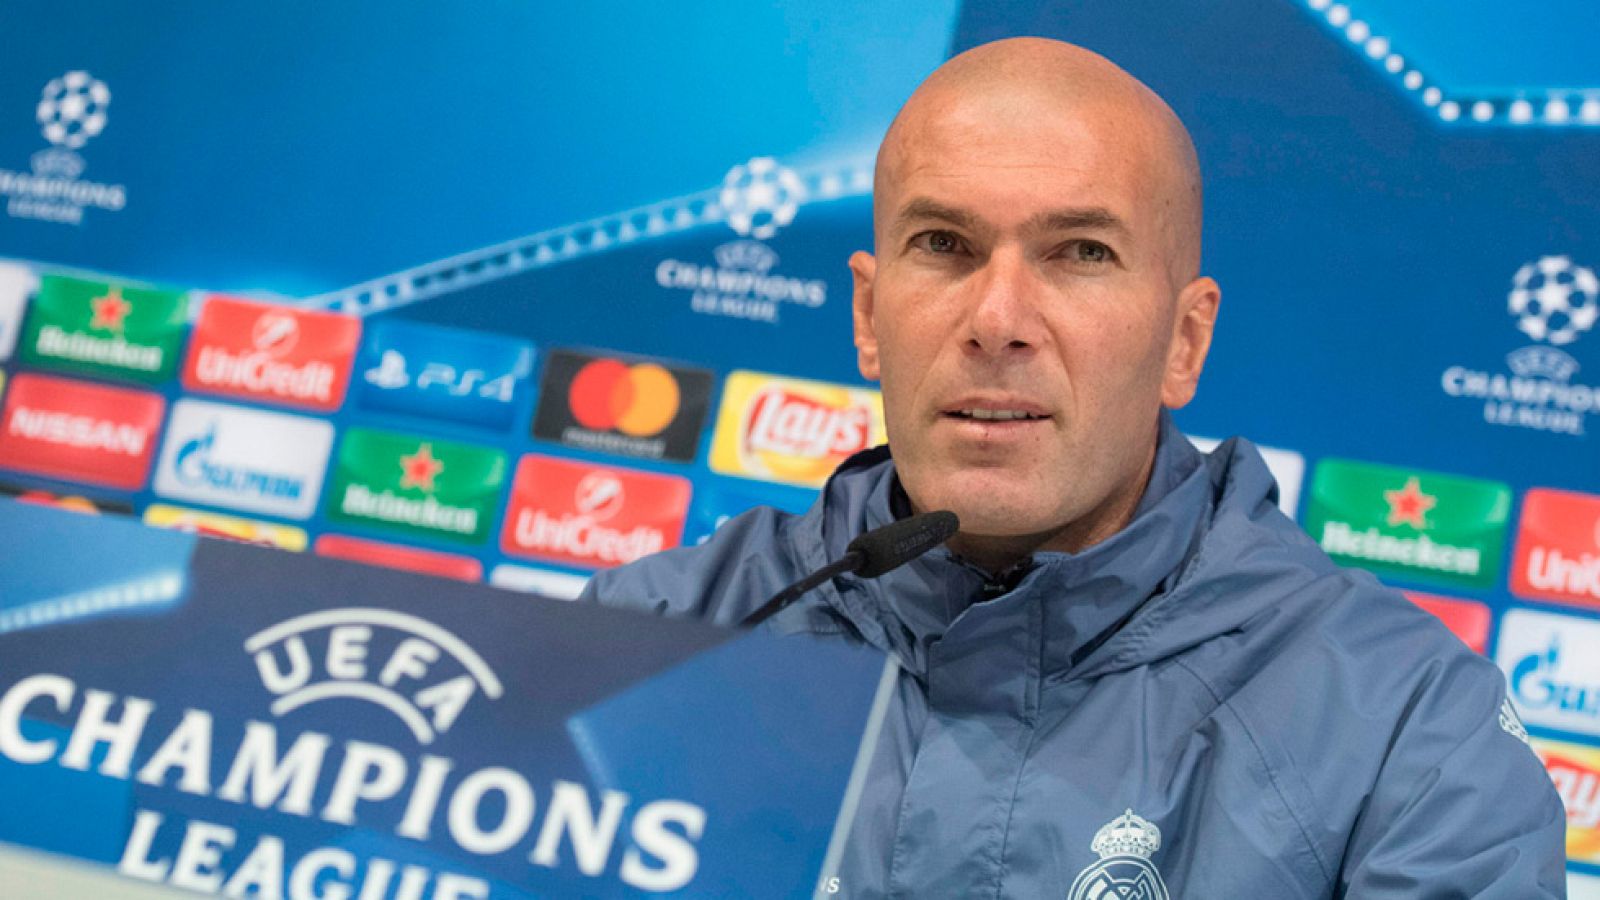 Zidane: "No vamos a calcular, vamos a intentar quedar primeros"